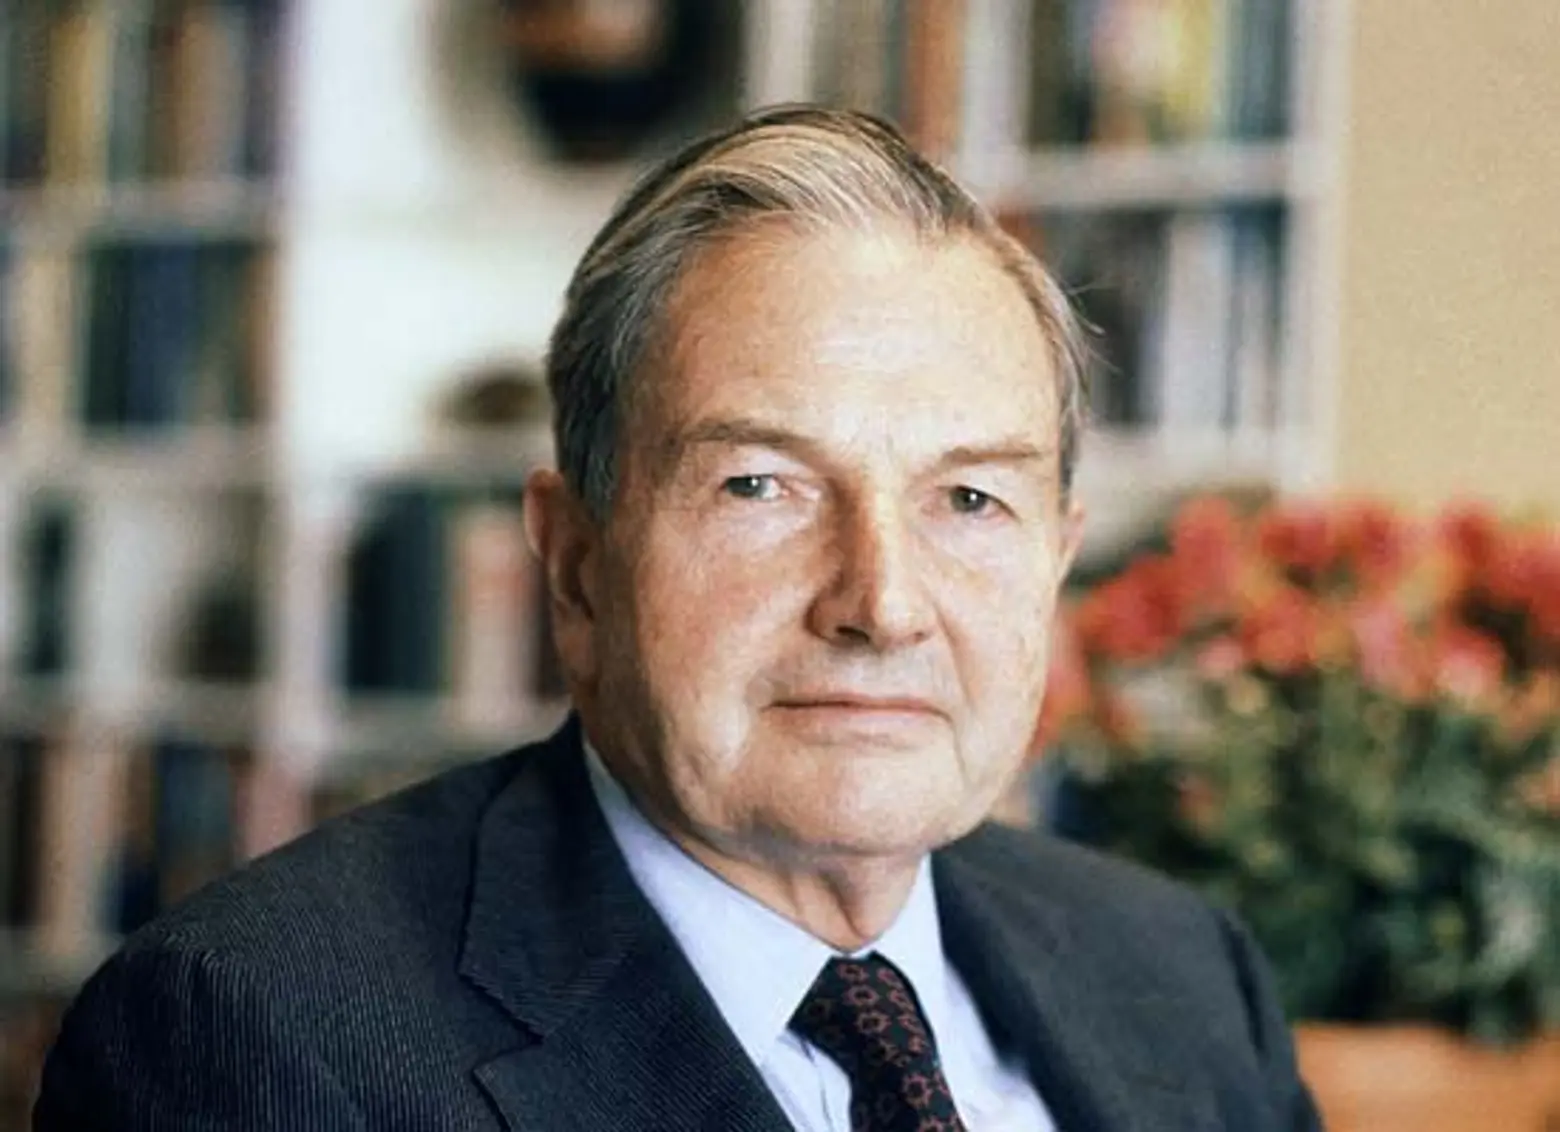 David Rockefeller, billionaire philanthropist, passes away at 101